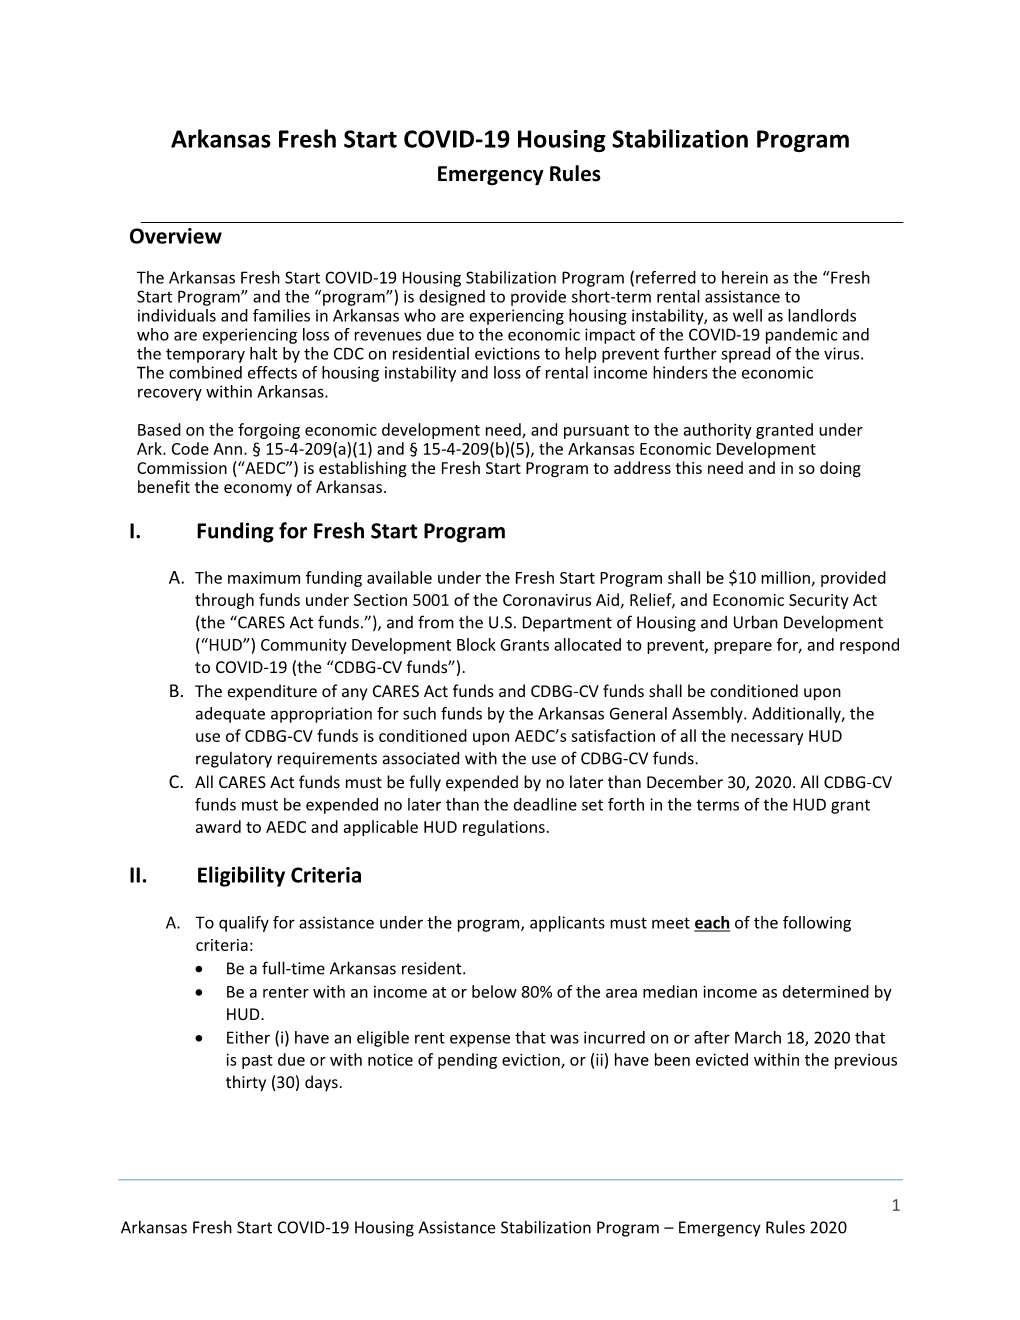 Arkansas Fresh Start COVID-19 Housing Stabilization Program Emergency Rules